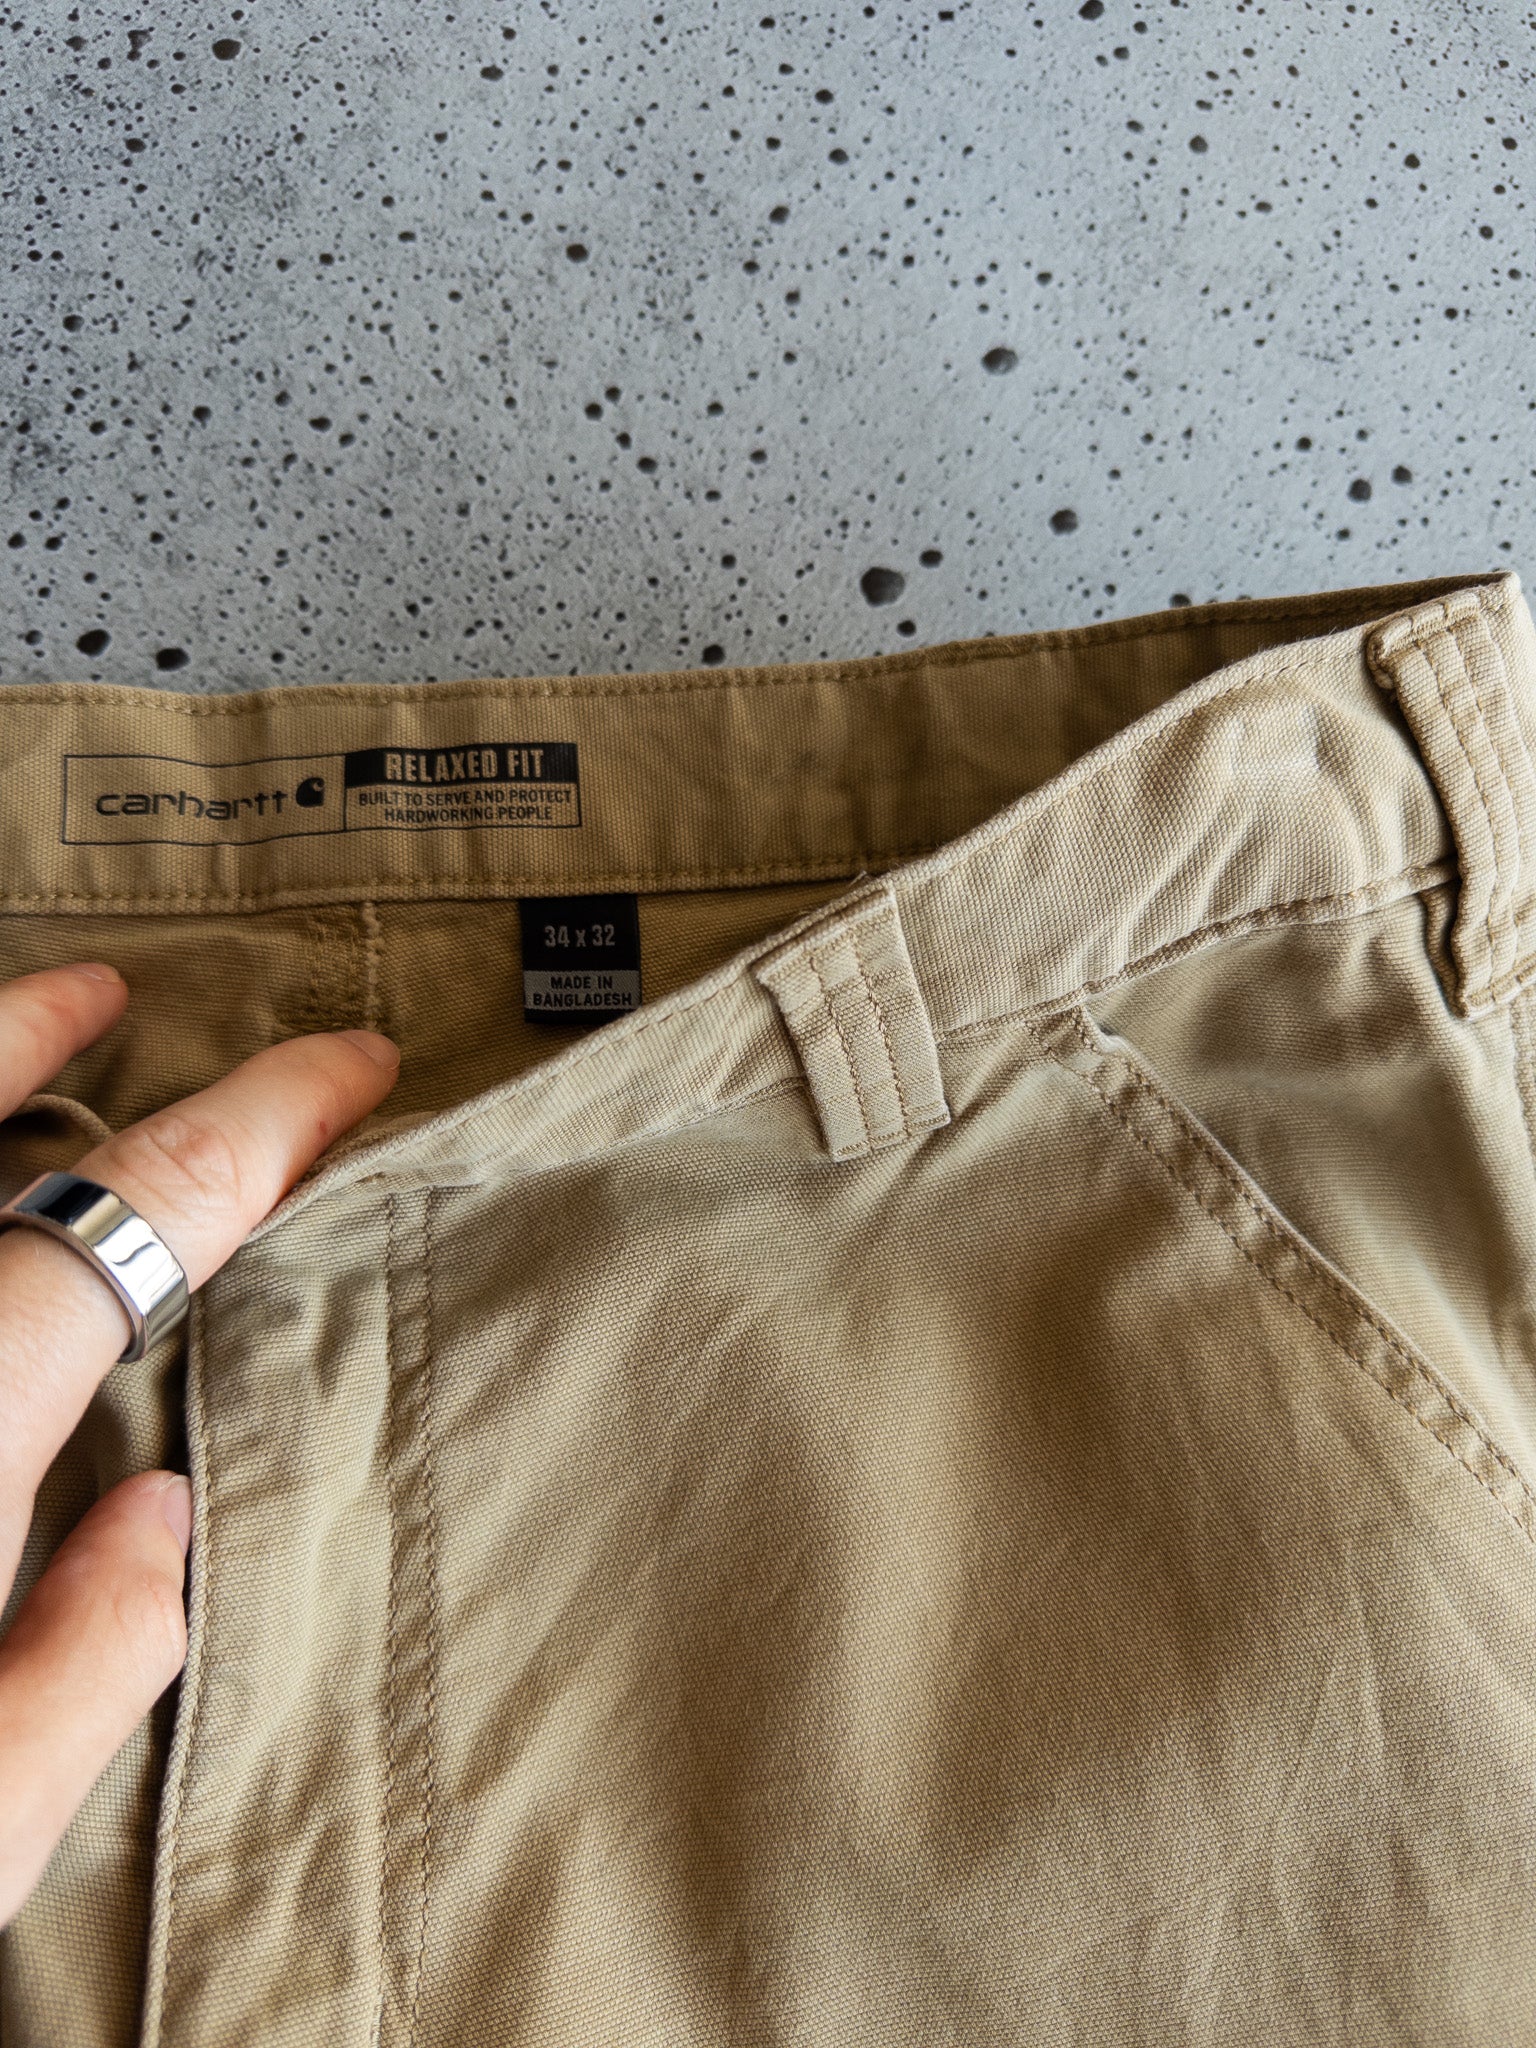 Vintage Carhartt Pants (W34)